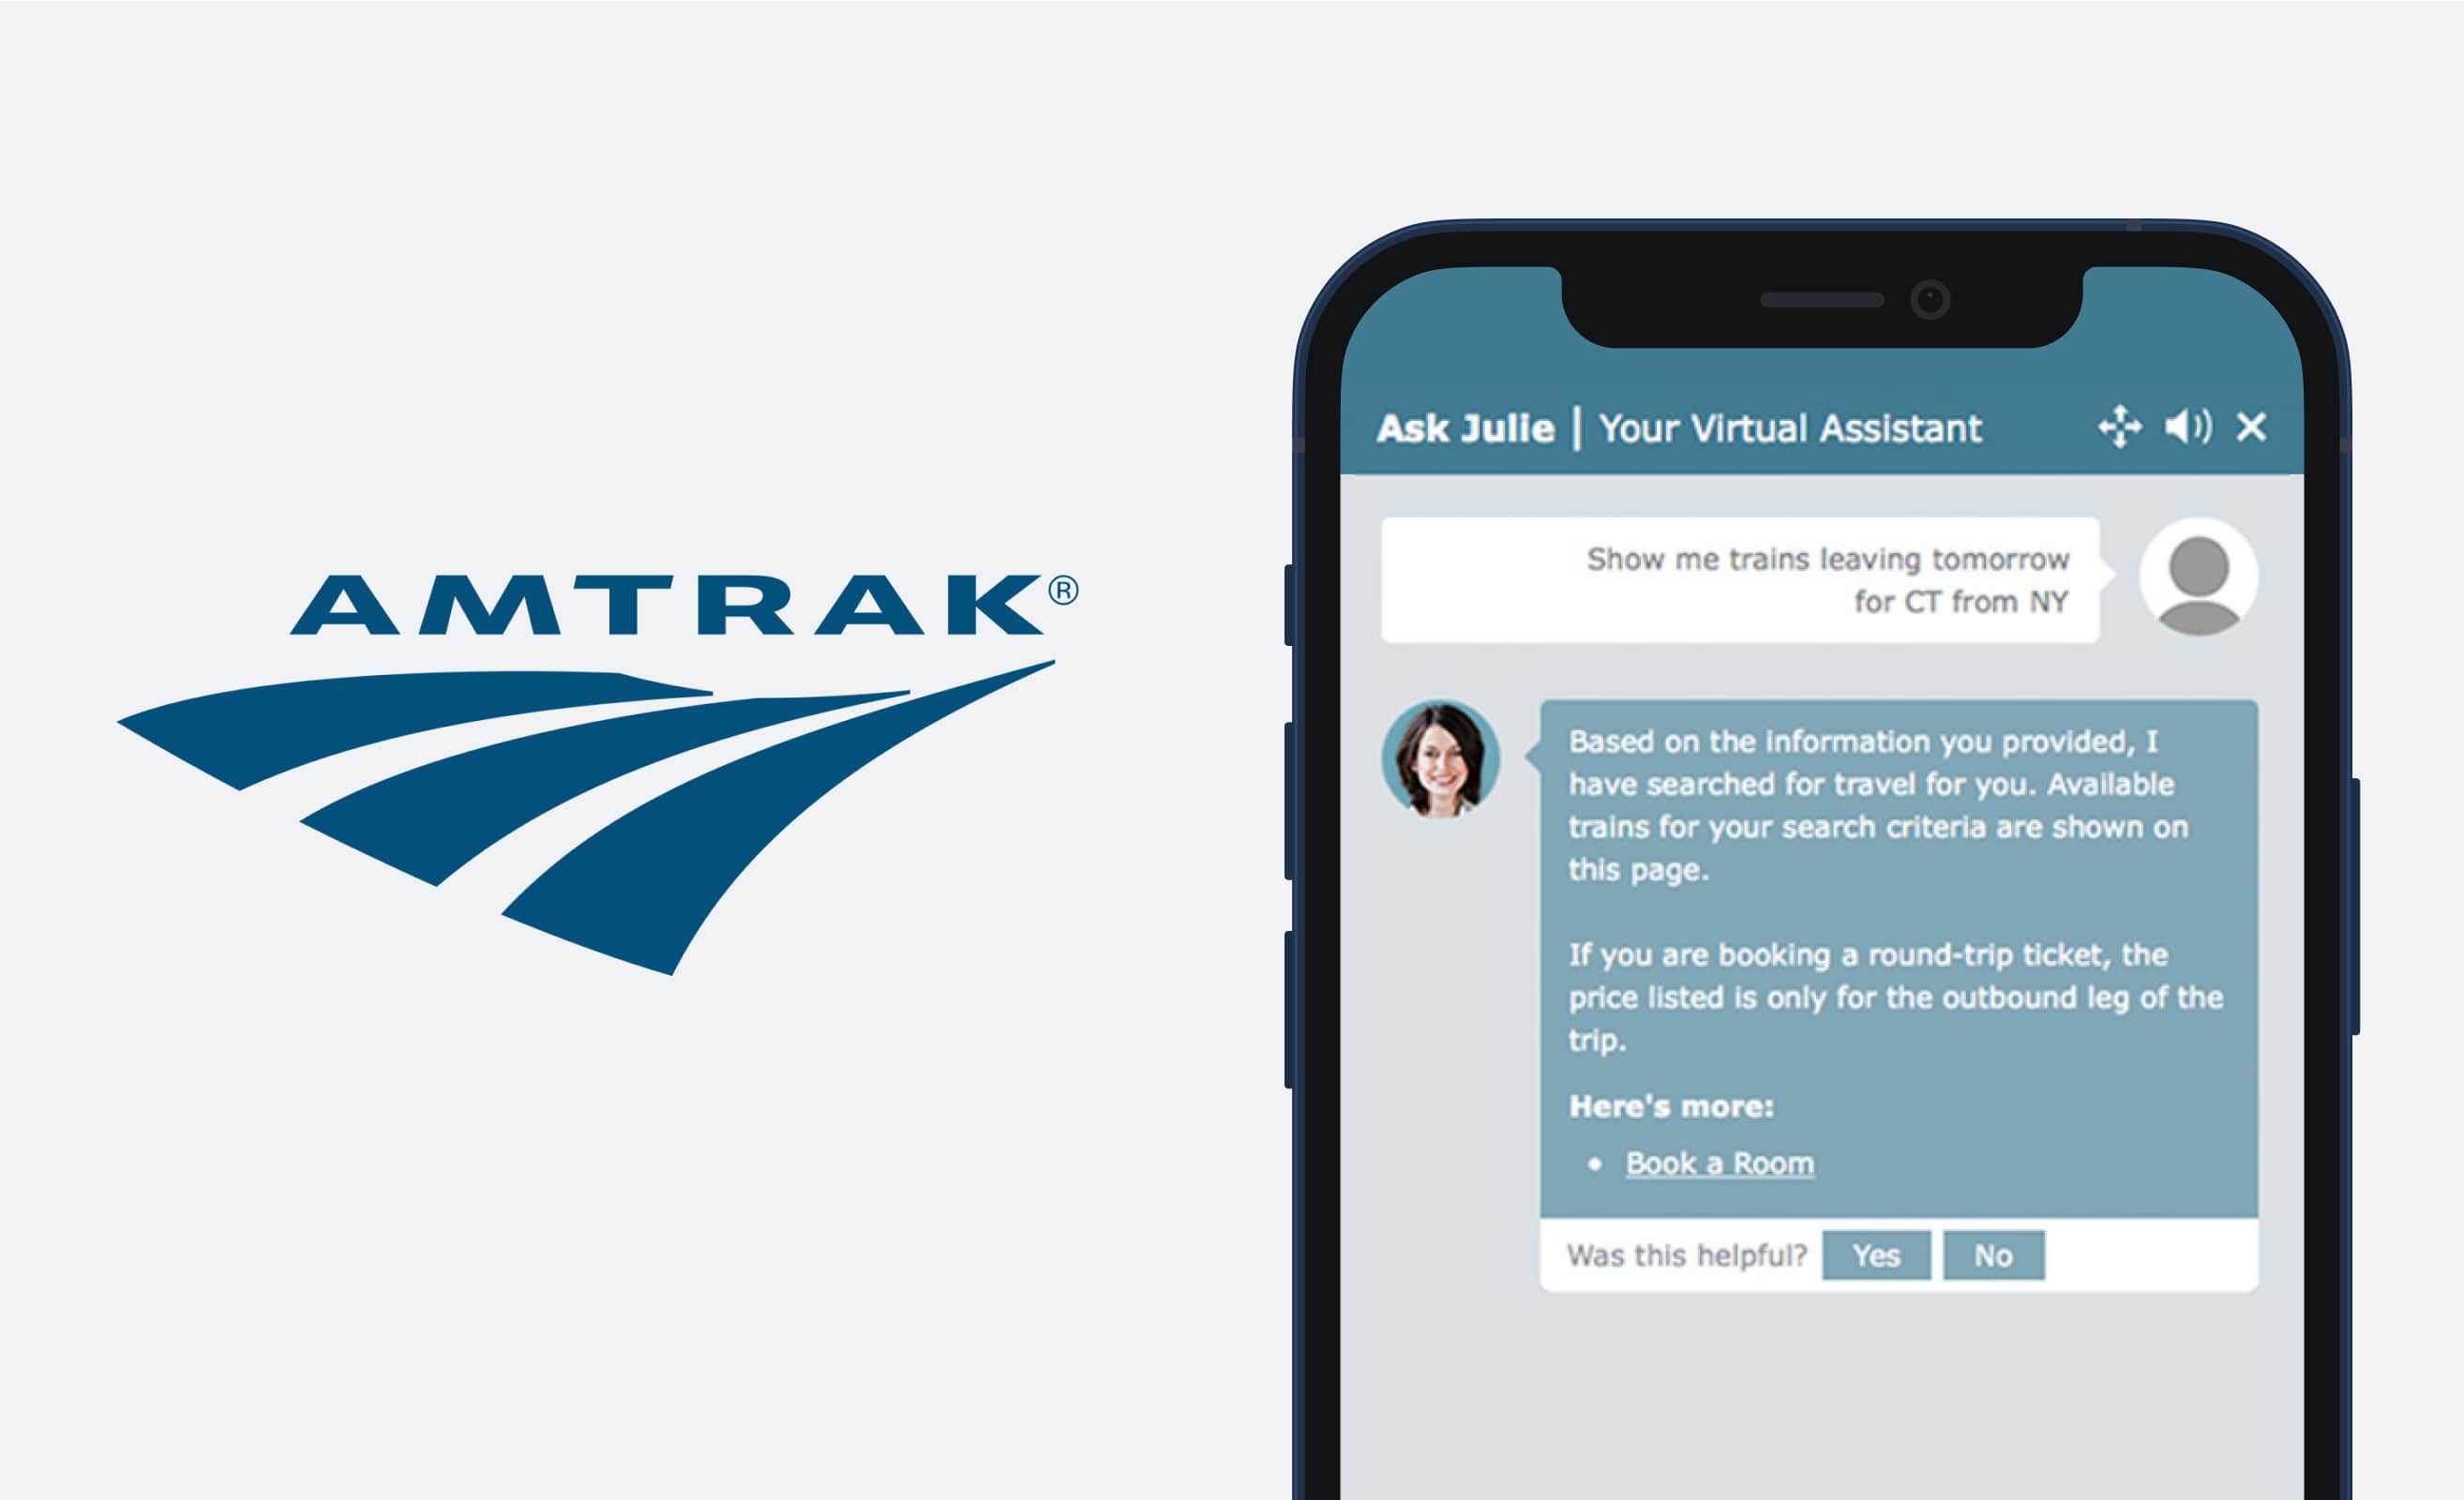 Amtrak chatbot